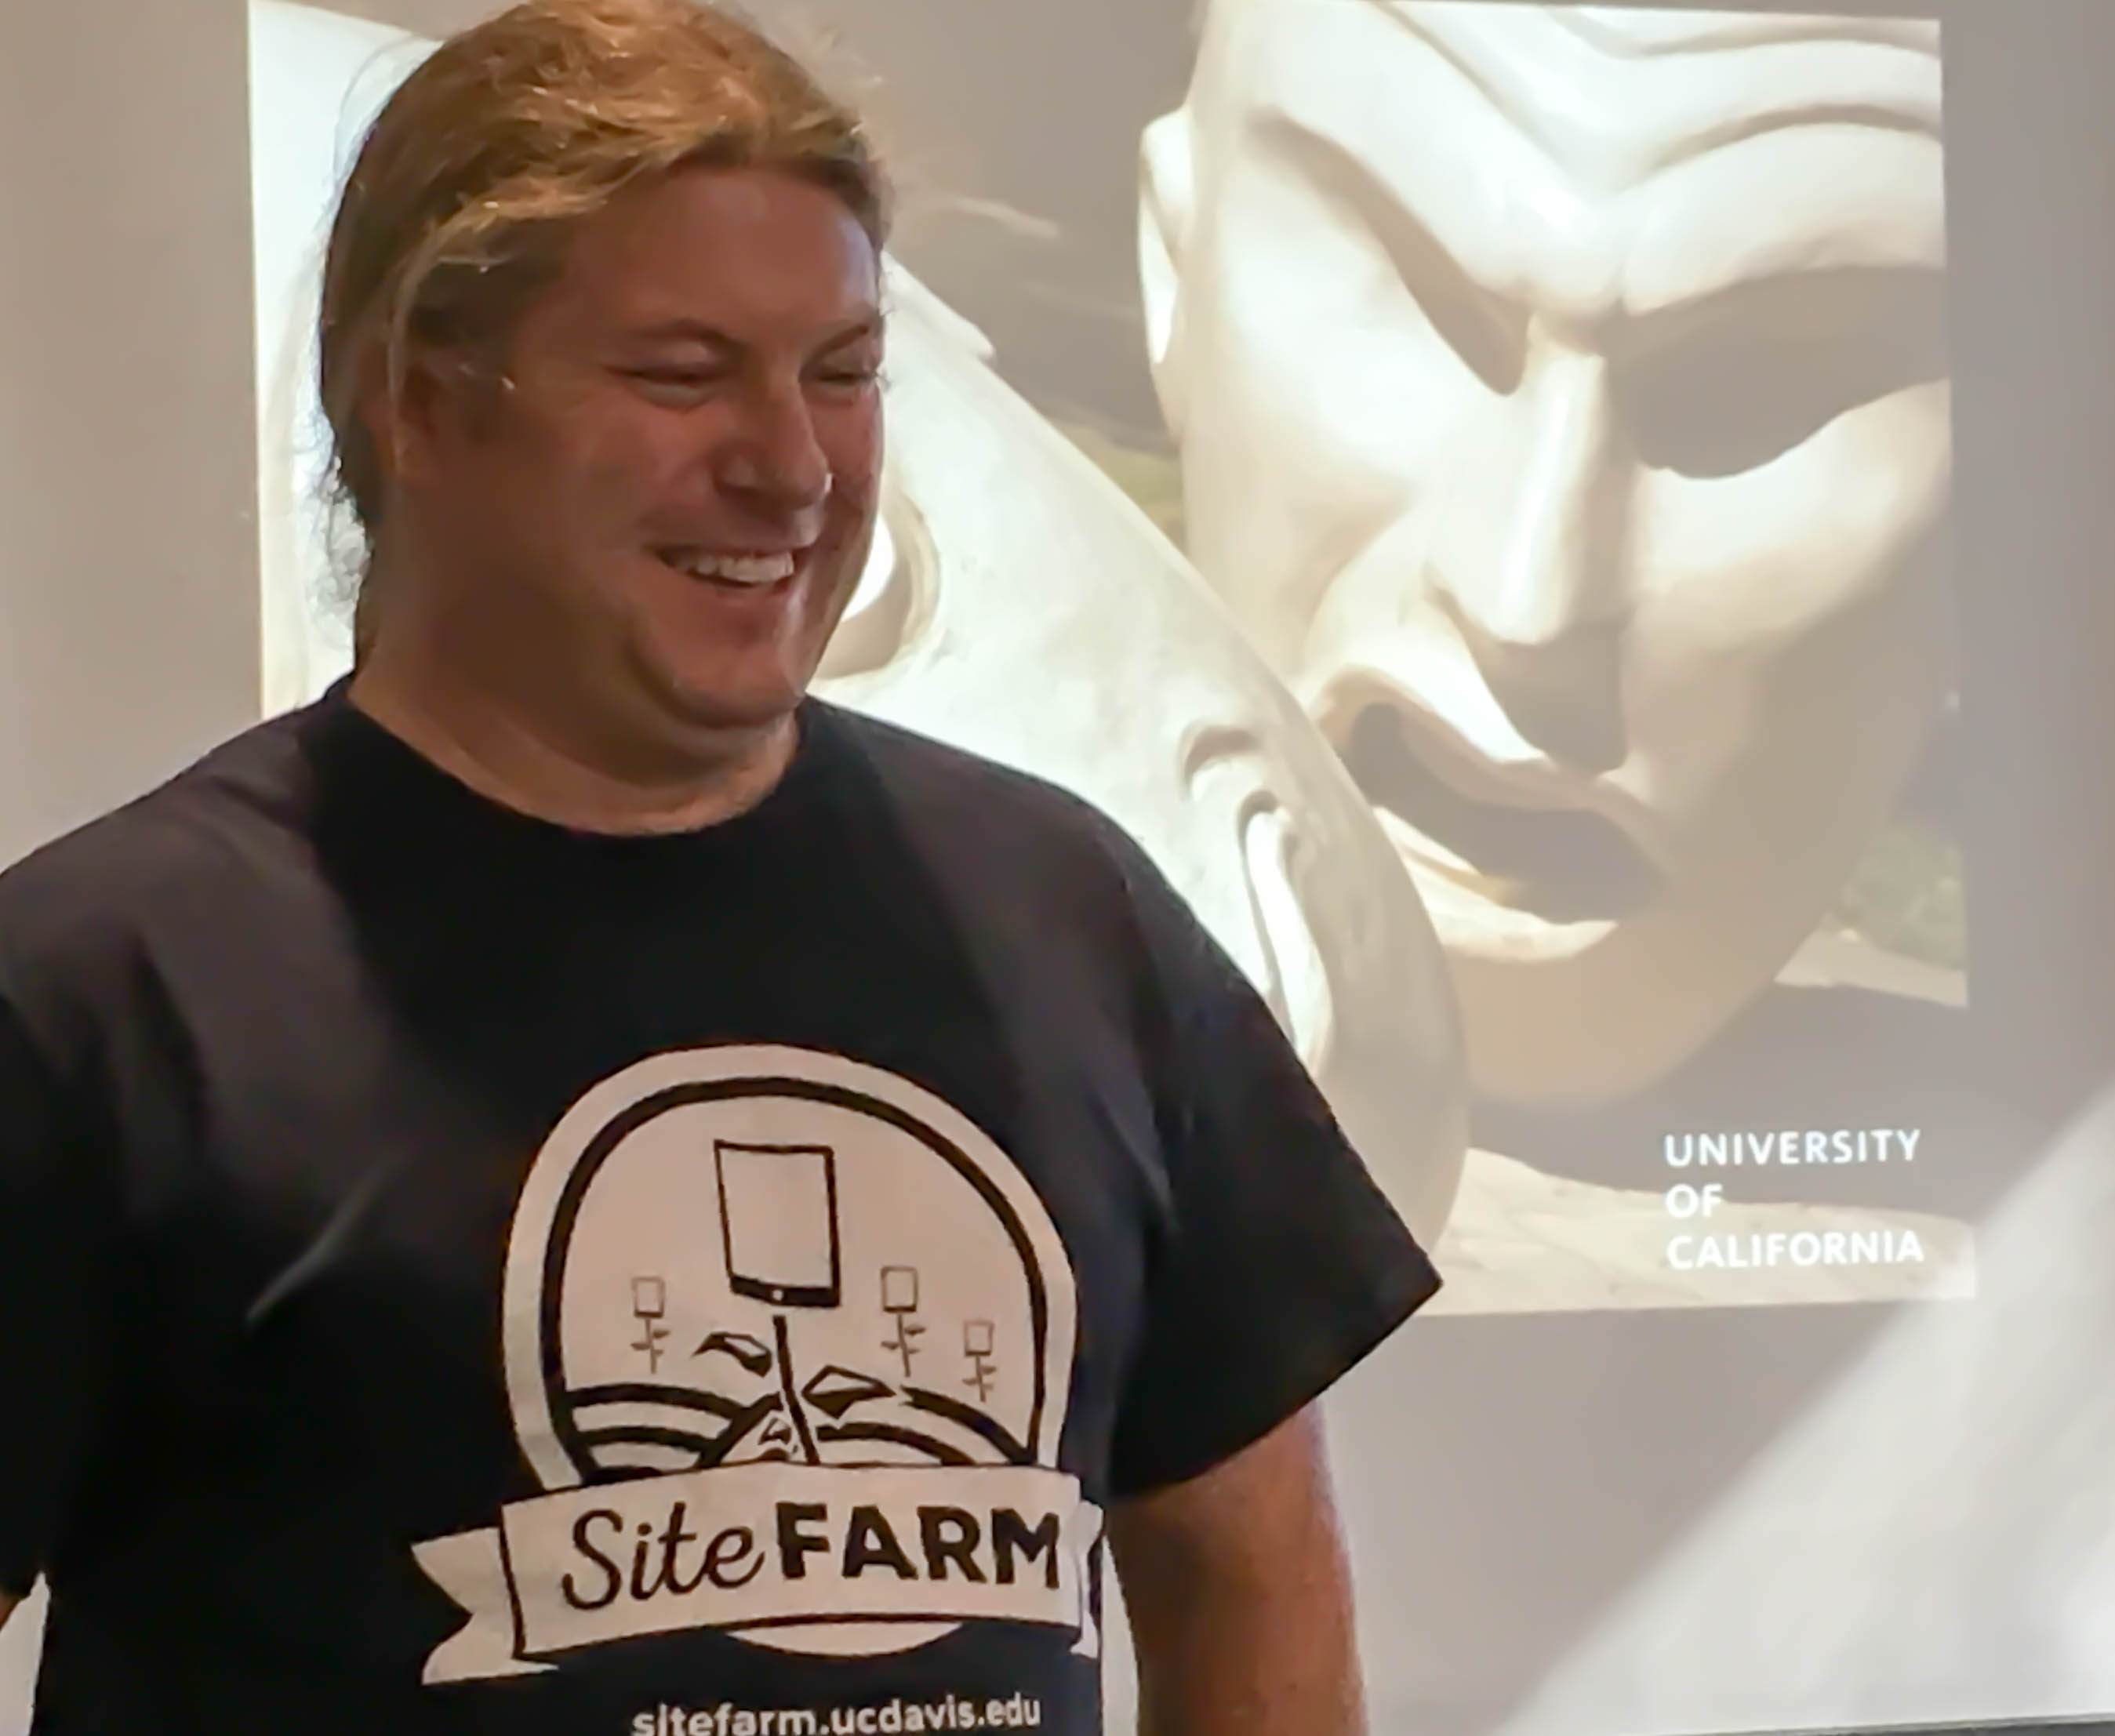 Shawn DeArmond presenting "Meet SiteFarm! University of California's Drupal 8 Collaboration"